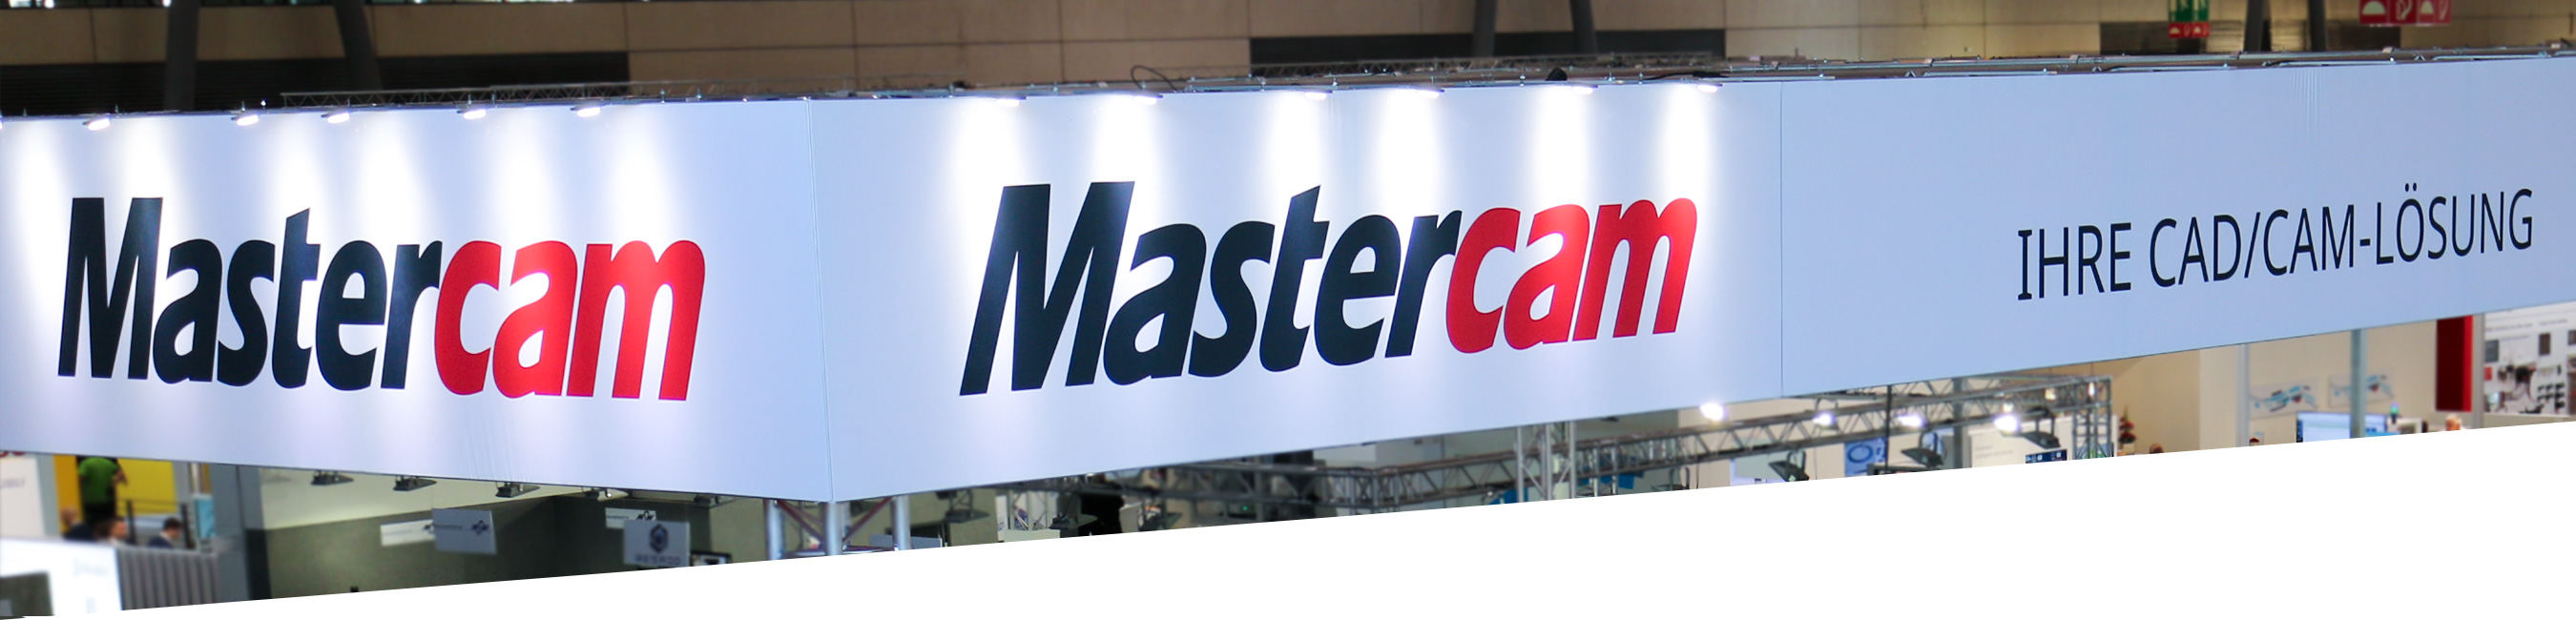 Mastercam-Termine_Cad-Cam-Software_Header